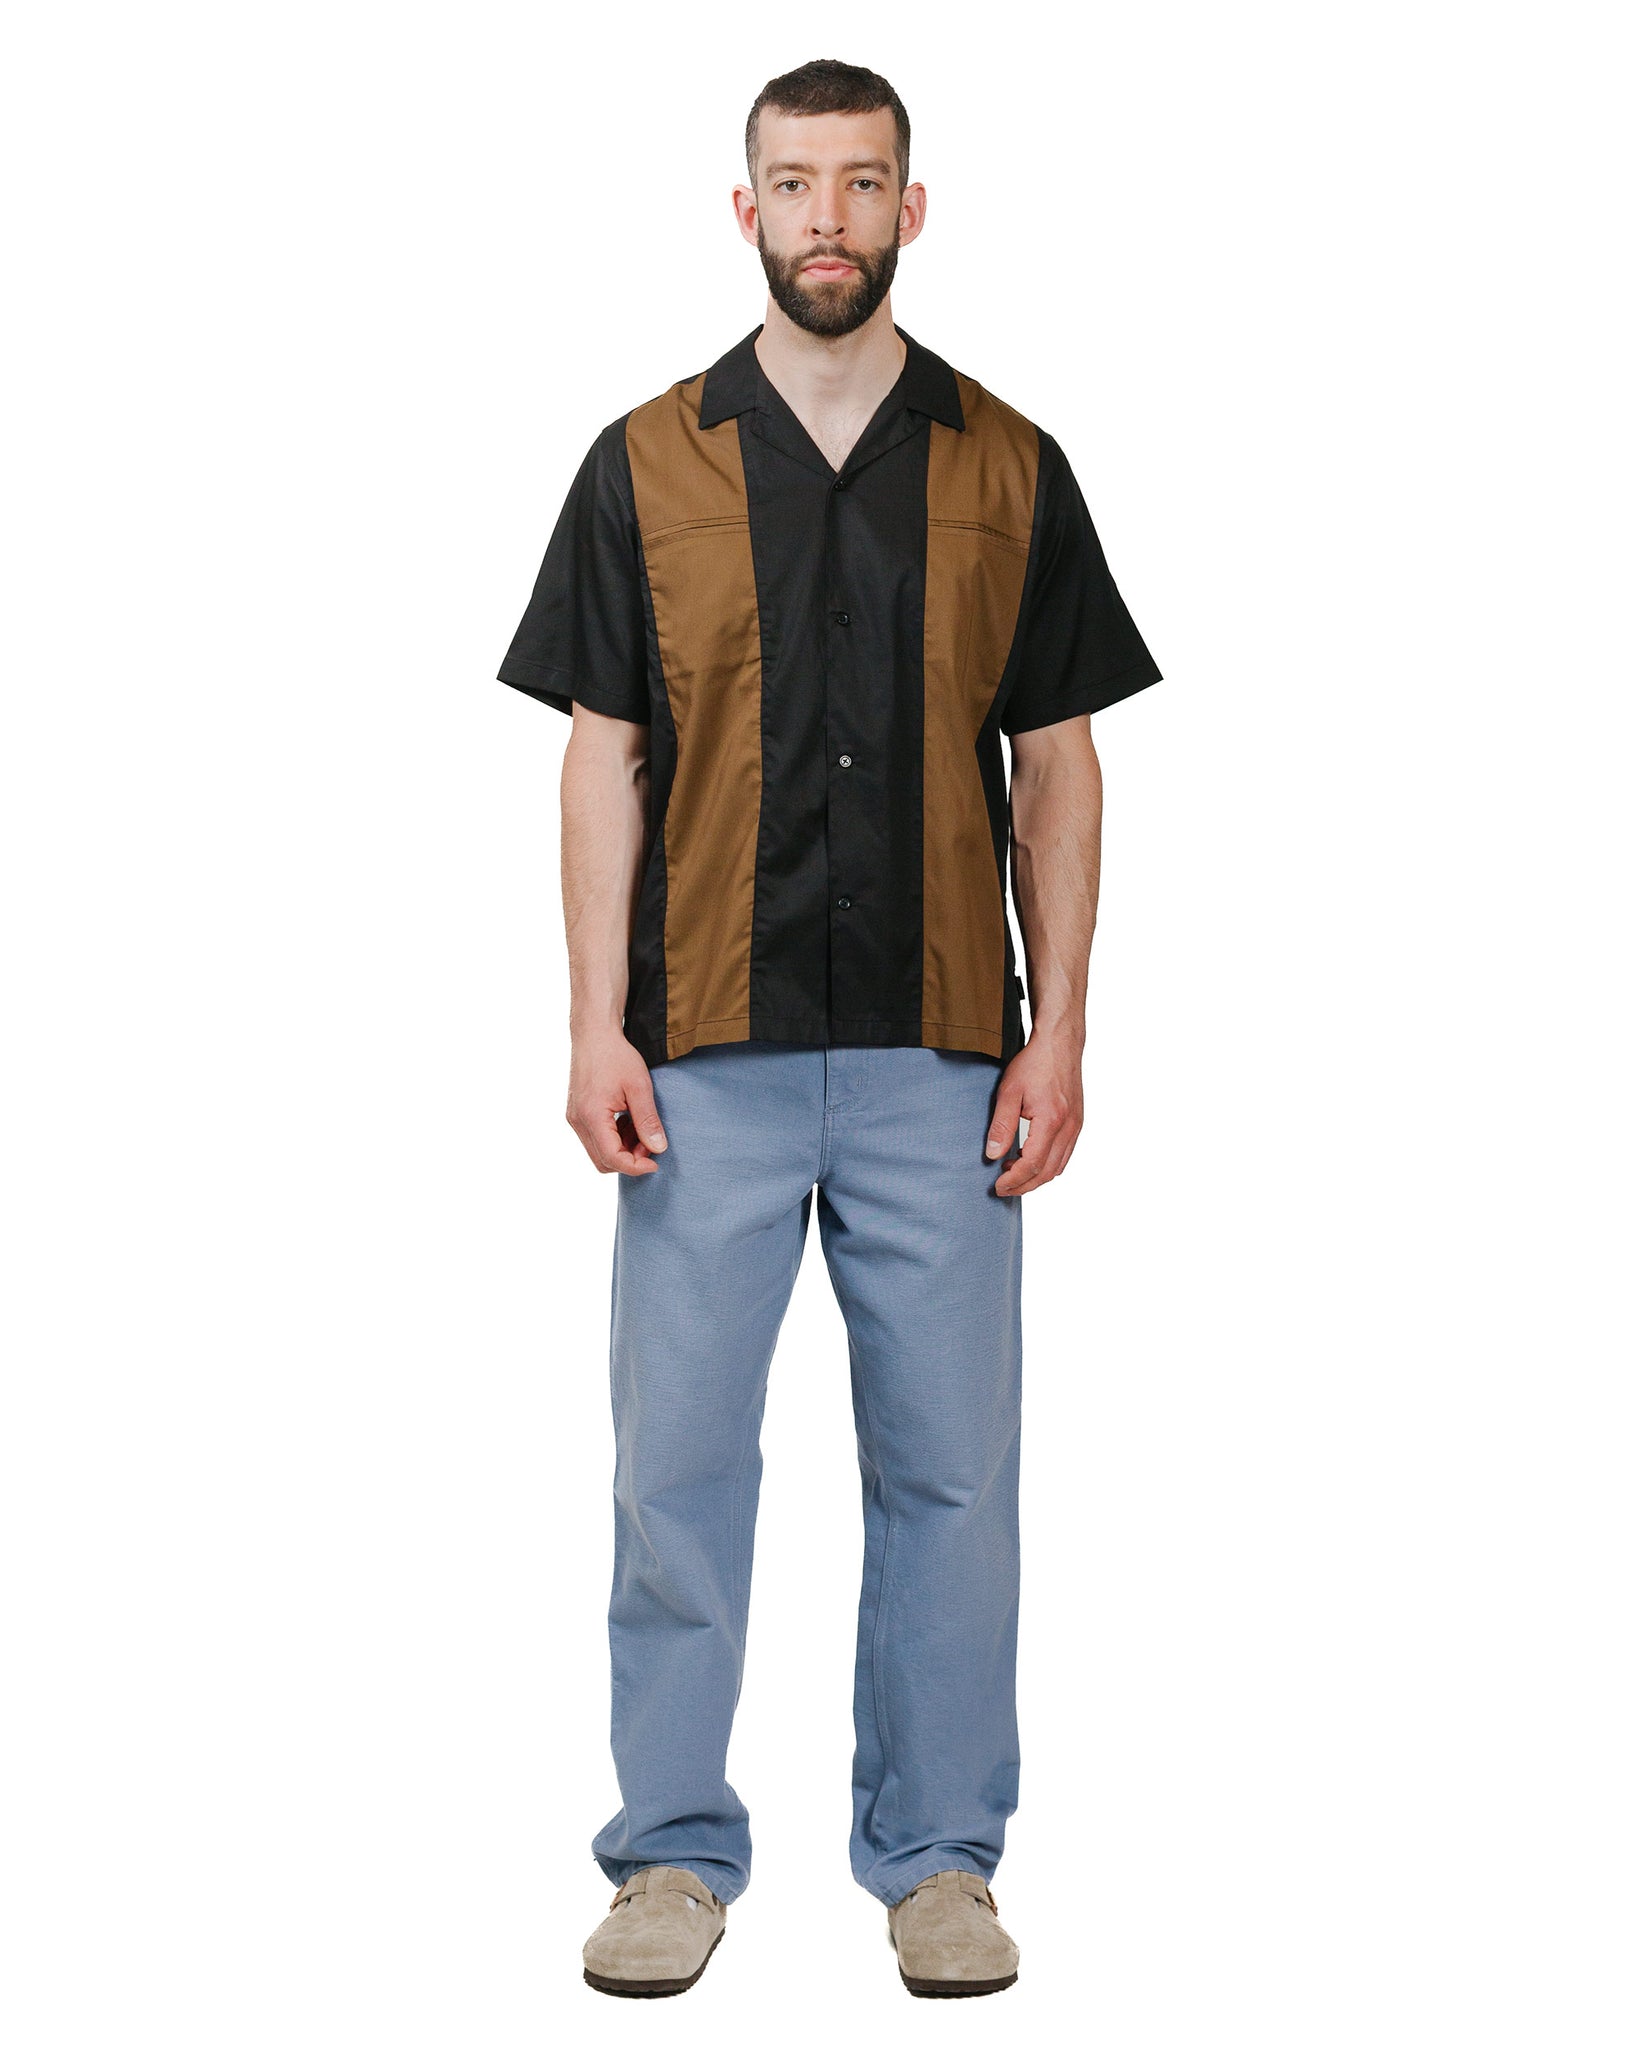 Carhartt W.I.P. Durango Shirt Black/Lumber model full